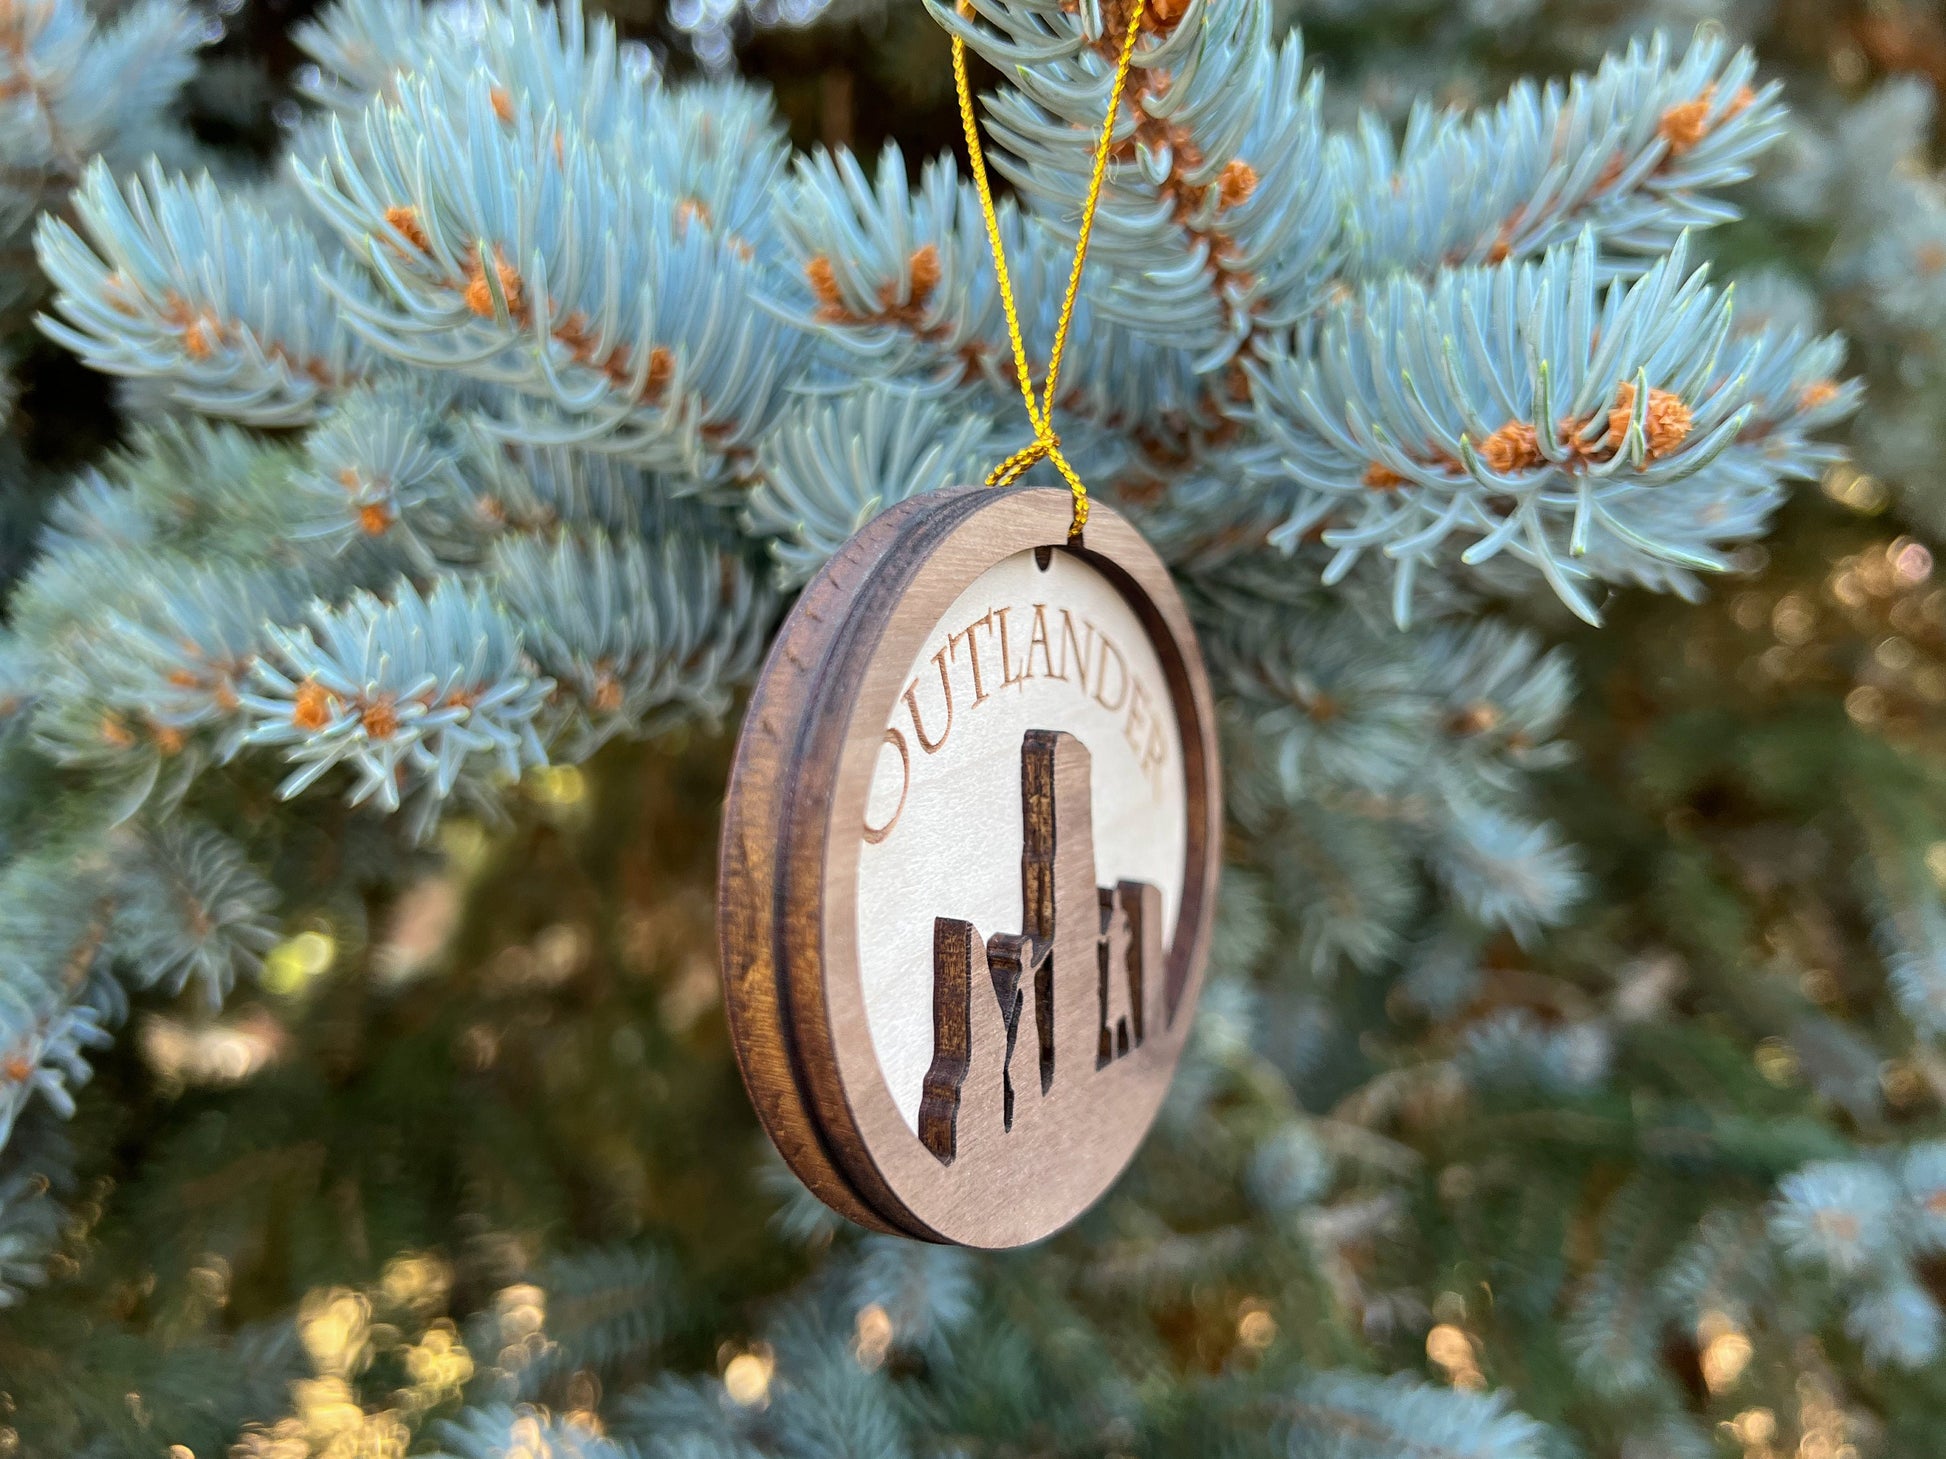 Outlander Ornament, Outlander Gift Idea, Wood Christmas Ornament